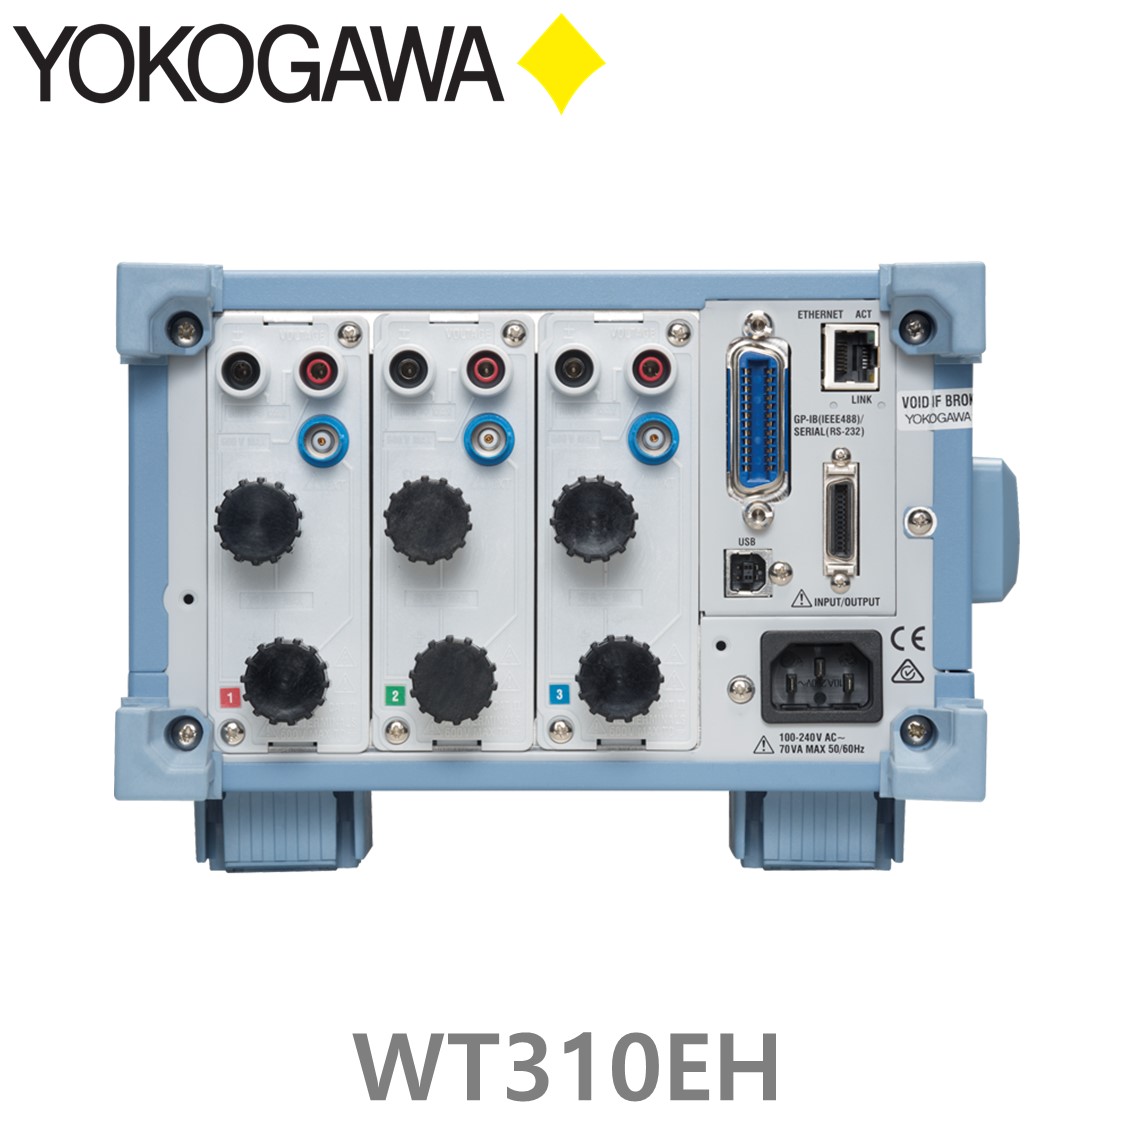 [ YOKOGAWA ] WT310EH 요꼬가와 디지탈 파워미터